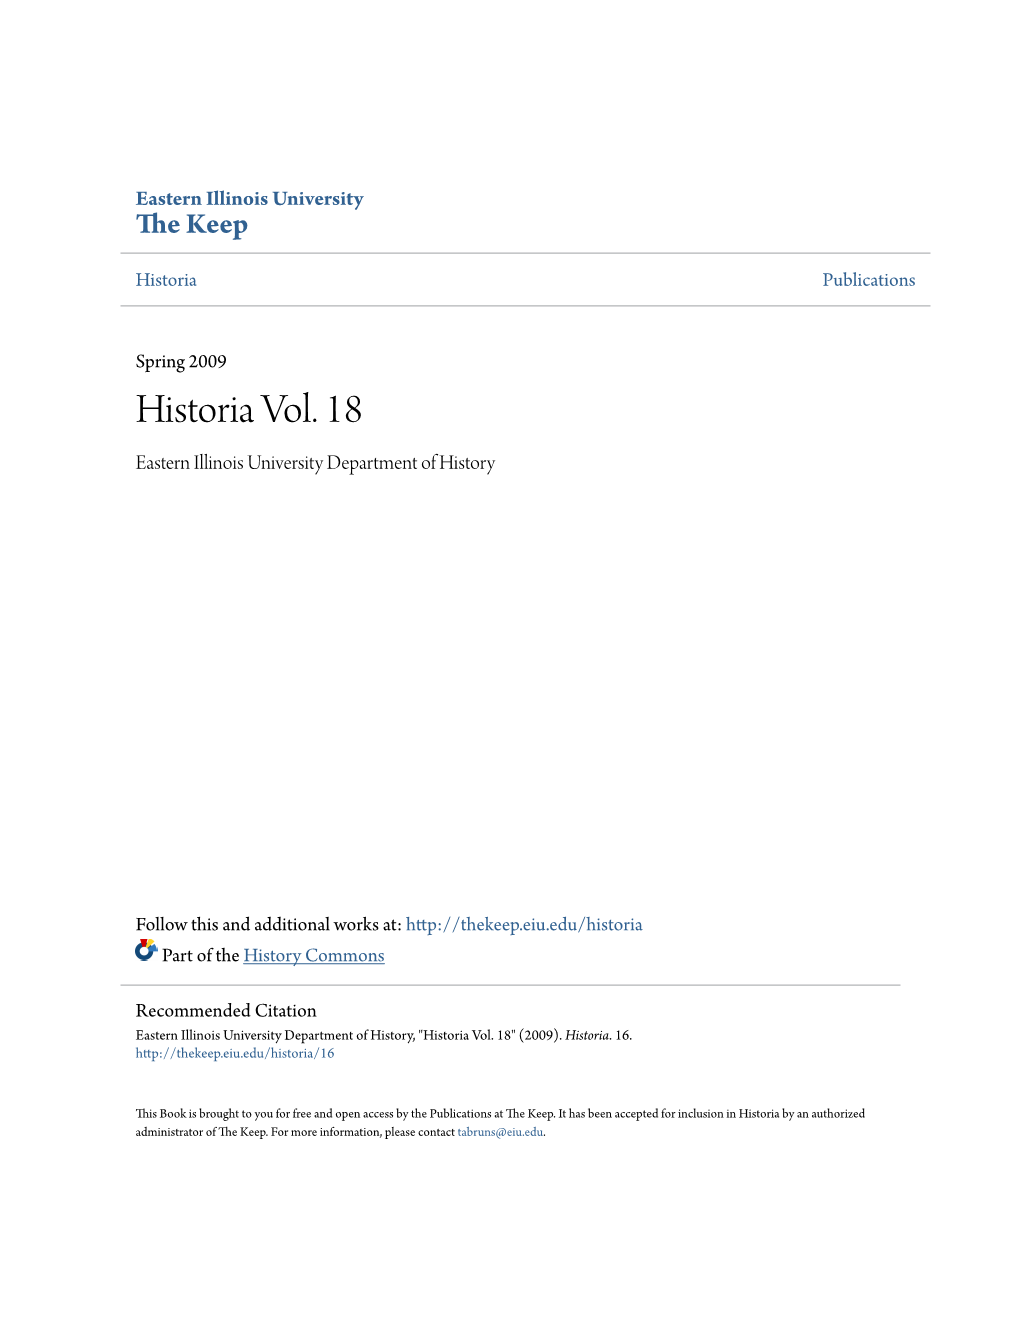 Historia Vol. 18 Eastern Illinois University Department of History